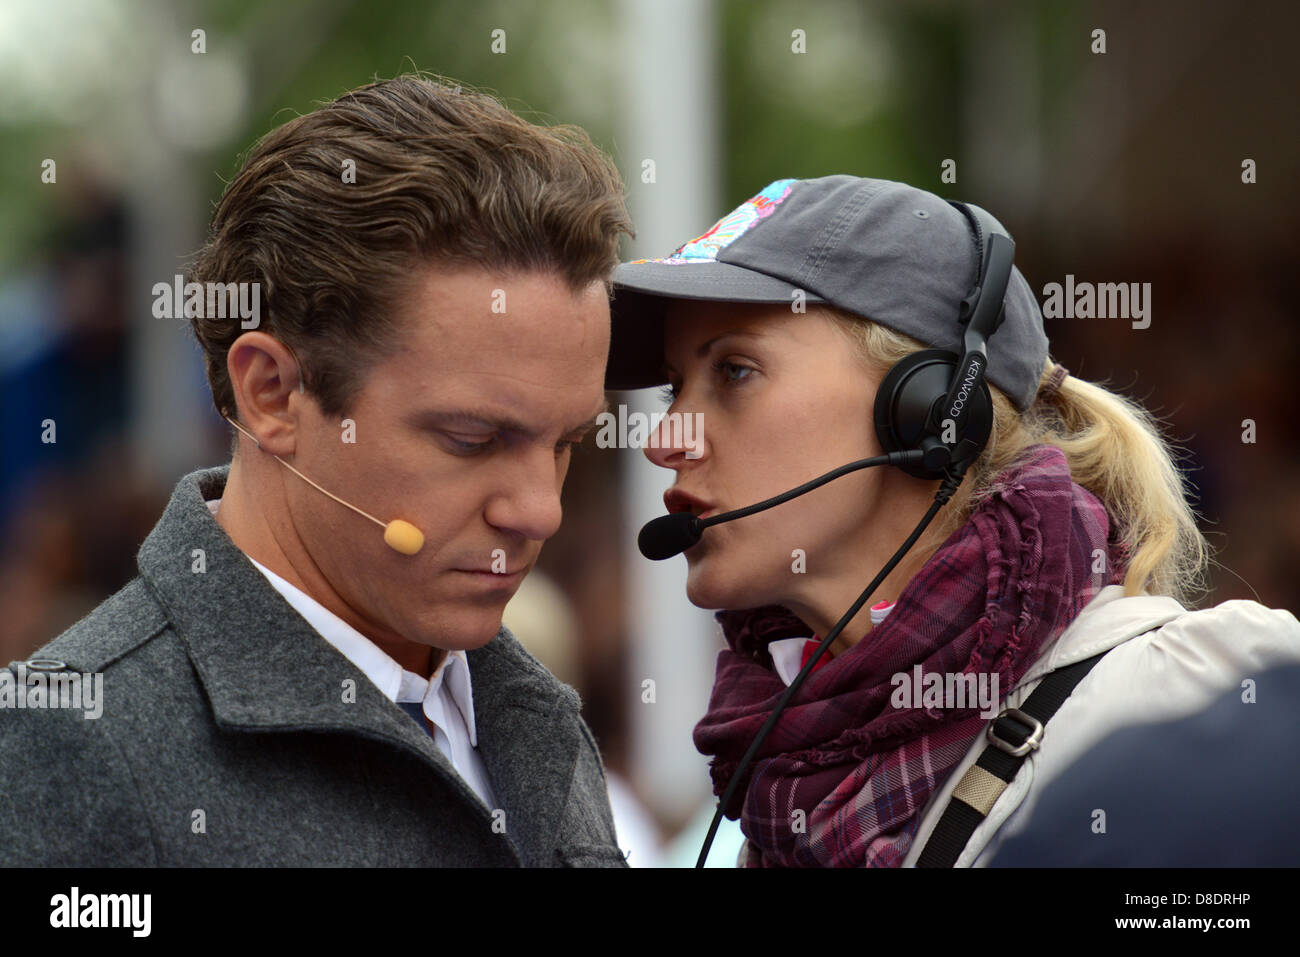 Stefan Mross e la sua nuova moglie Susanne talk durante l'ARD music show 'Immer wieder sonntags' a Europapark di Rust, Germania, 26 maggio 2013. Foto: Patrick Seeger Foto Stock